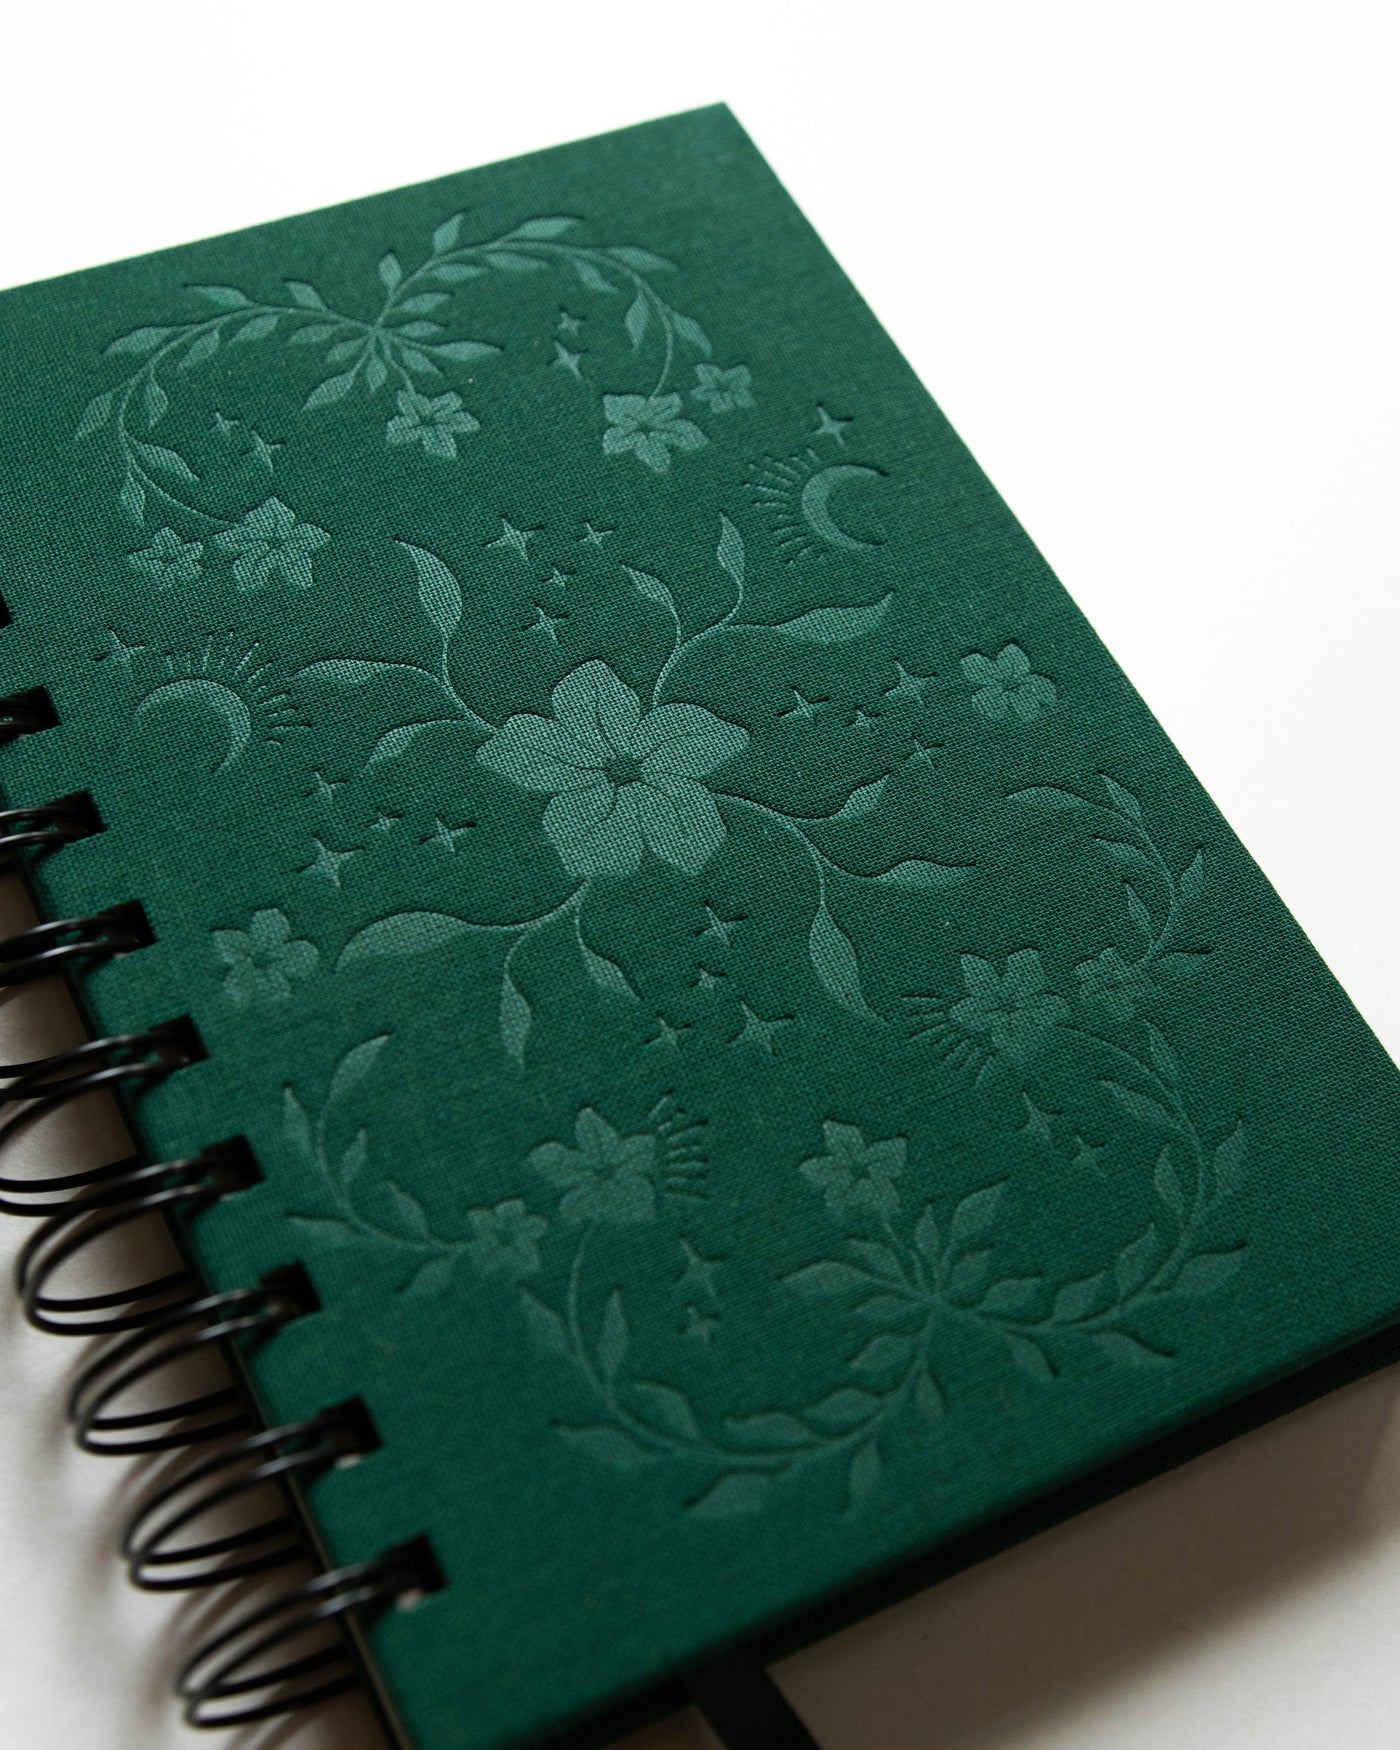 Botanical Spiral Bound Notebook - Wholesale